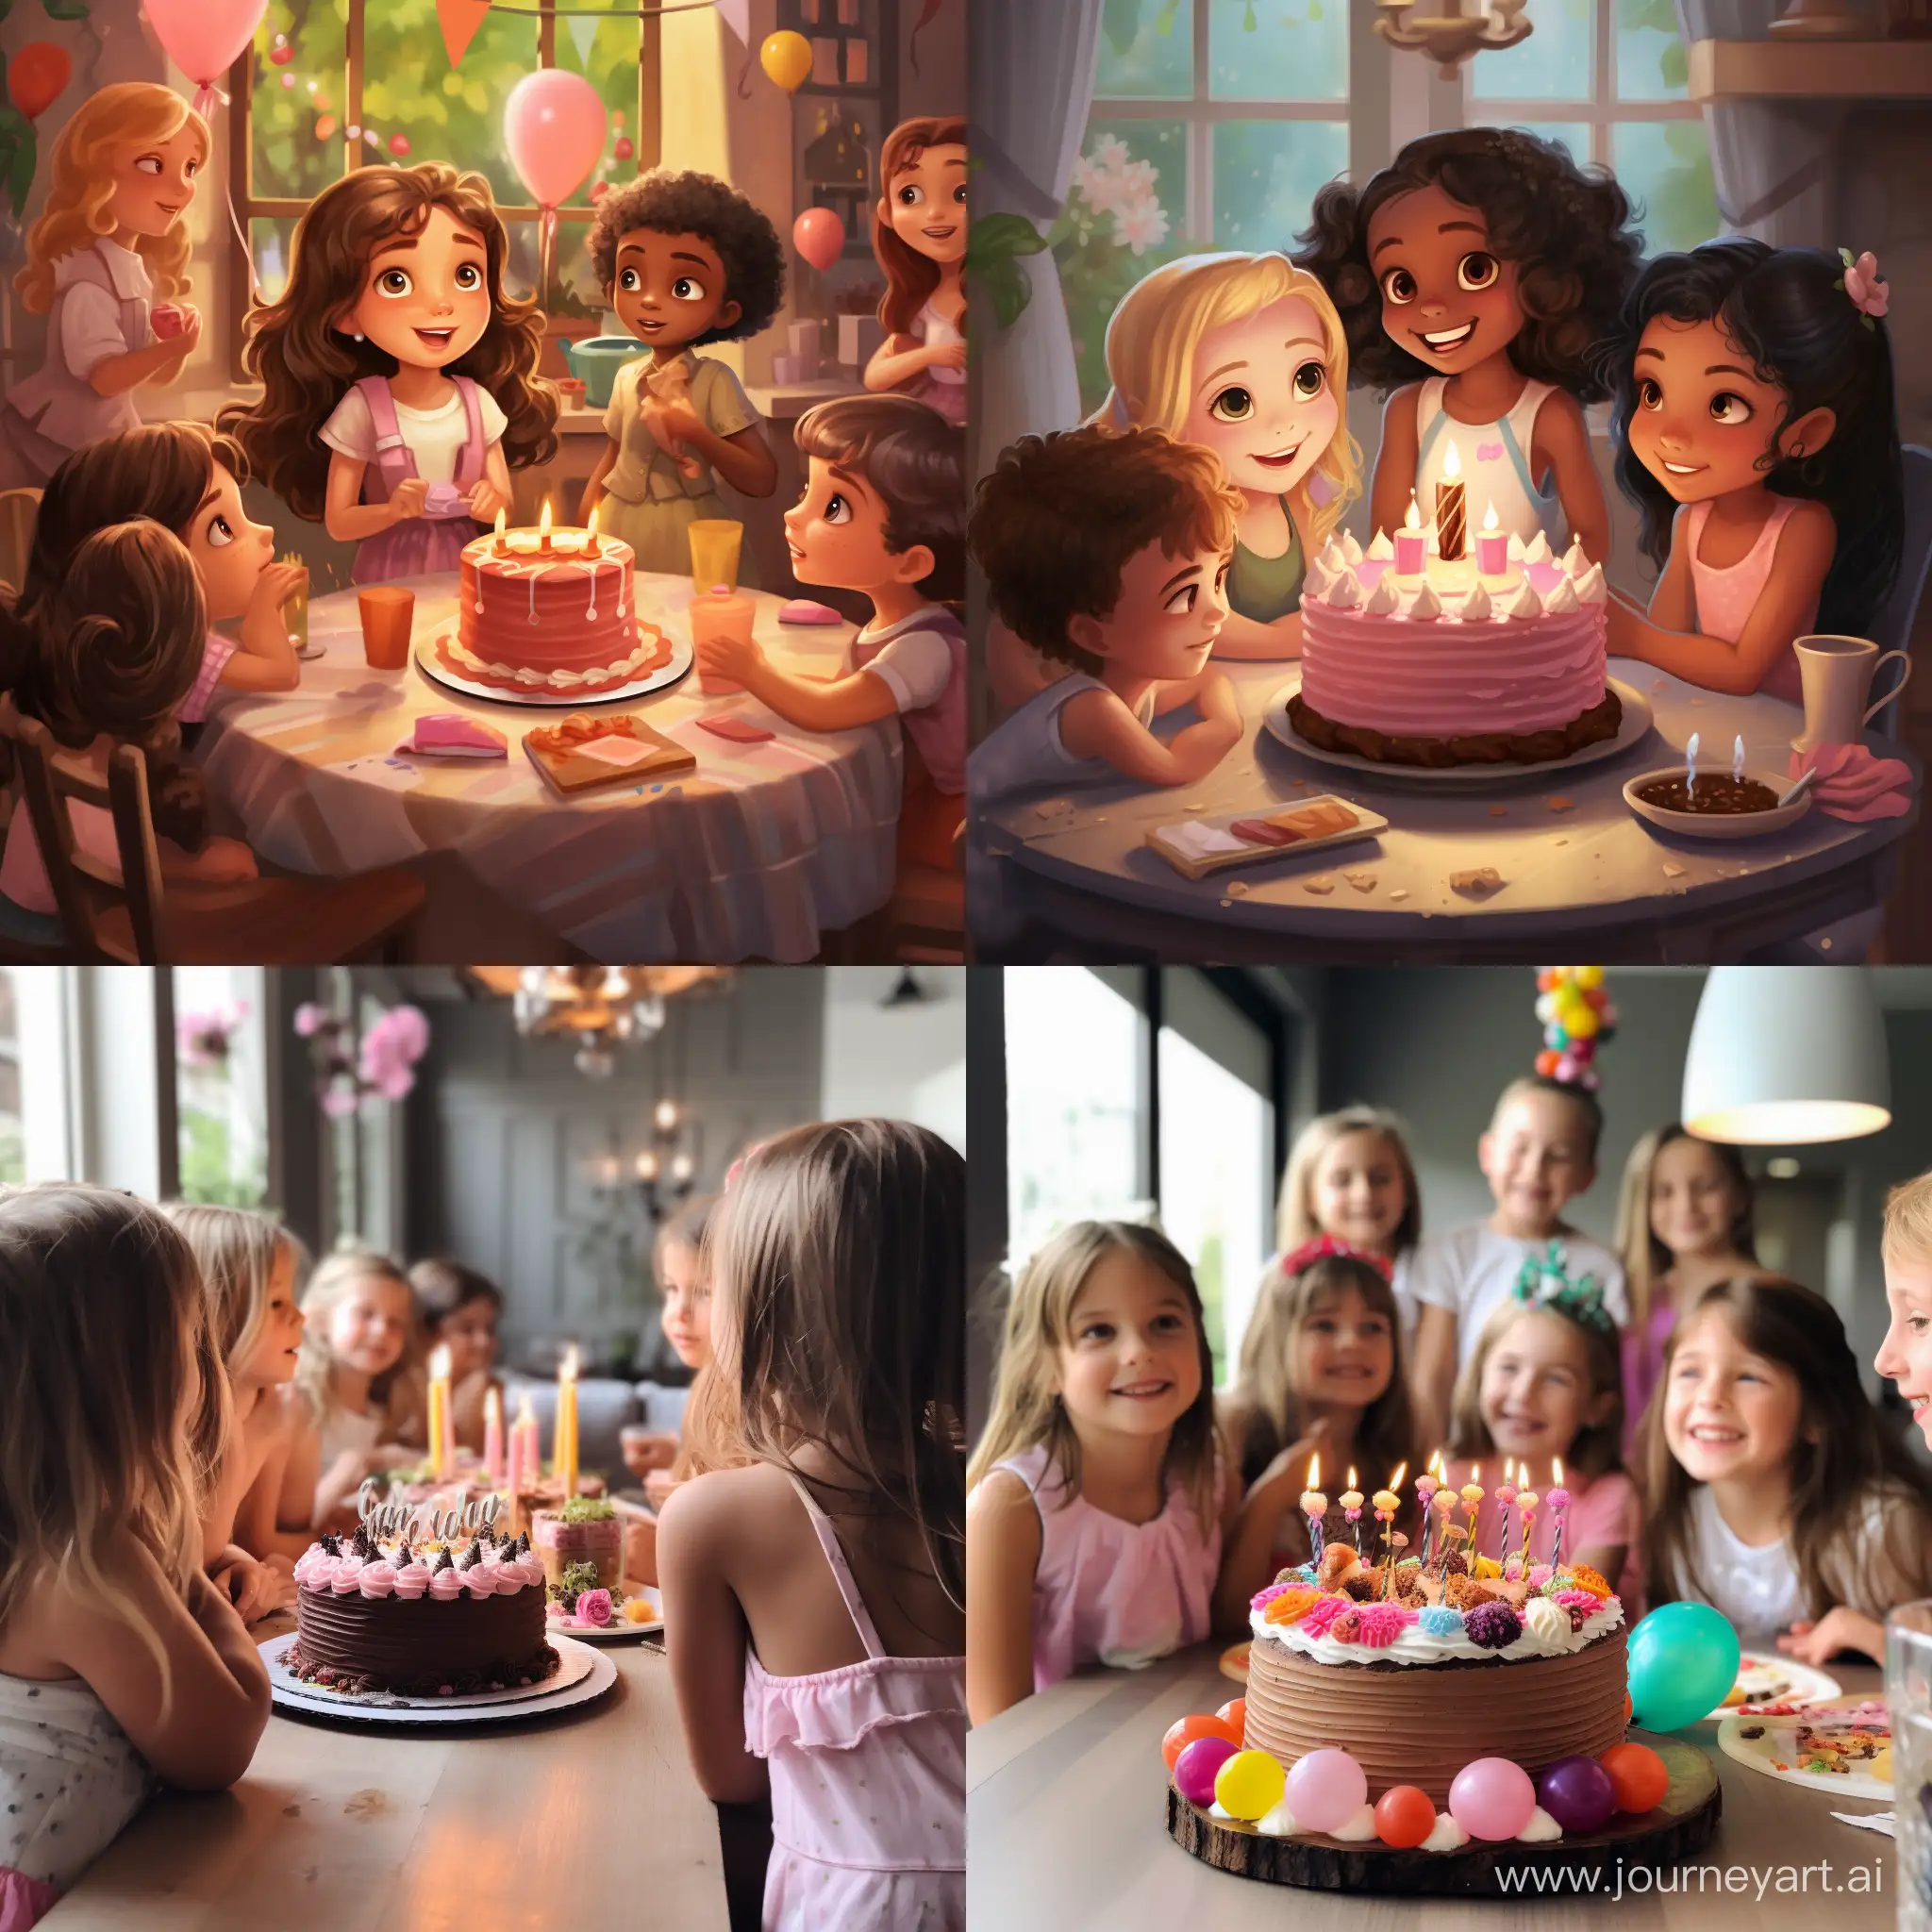 Joyful-Birthday-Celebration-with-Friends-and-Cake-Cutting